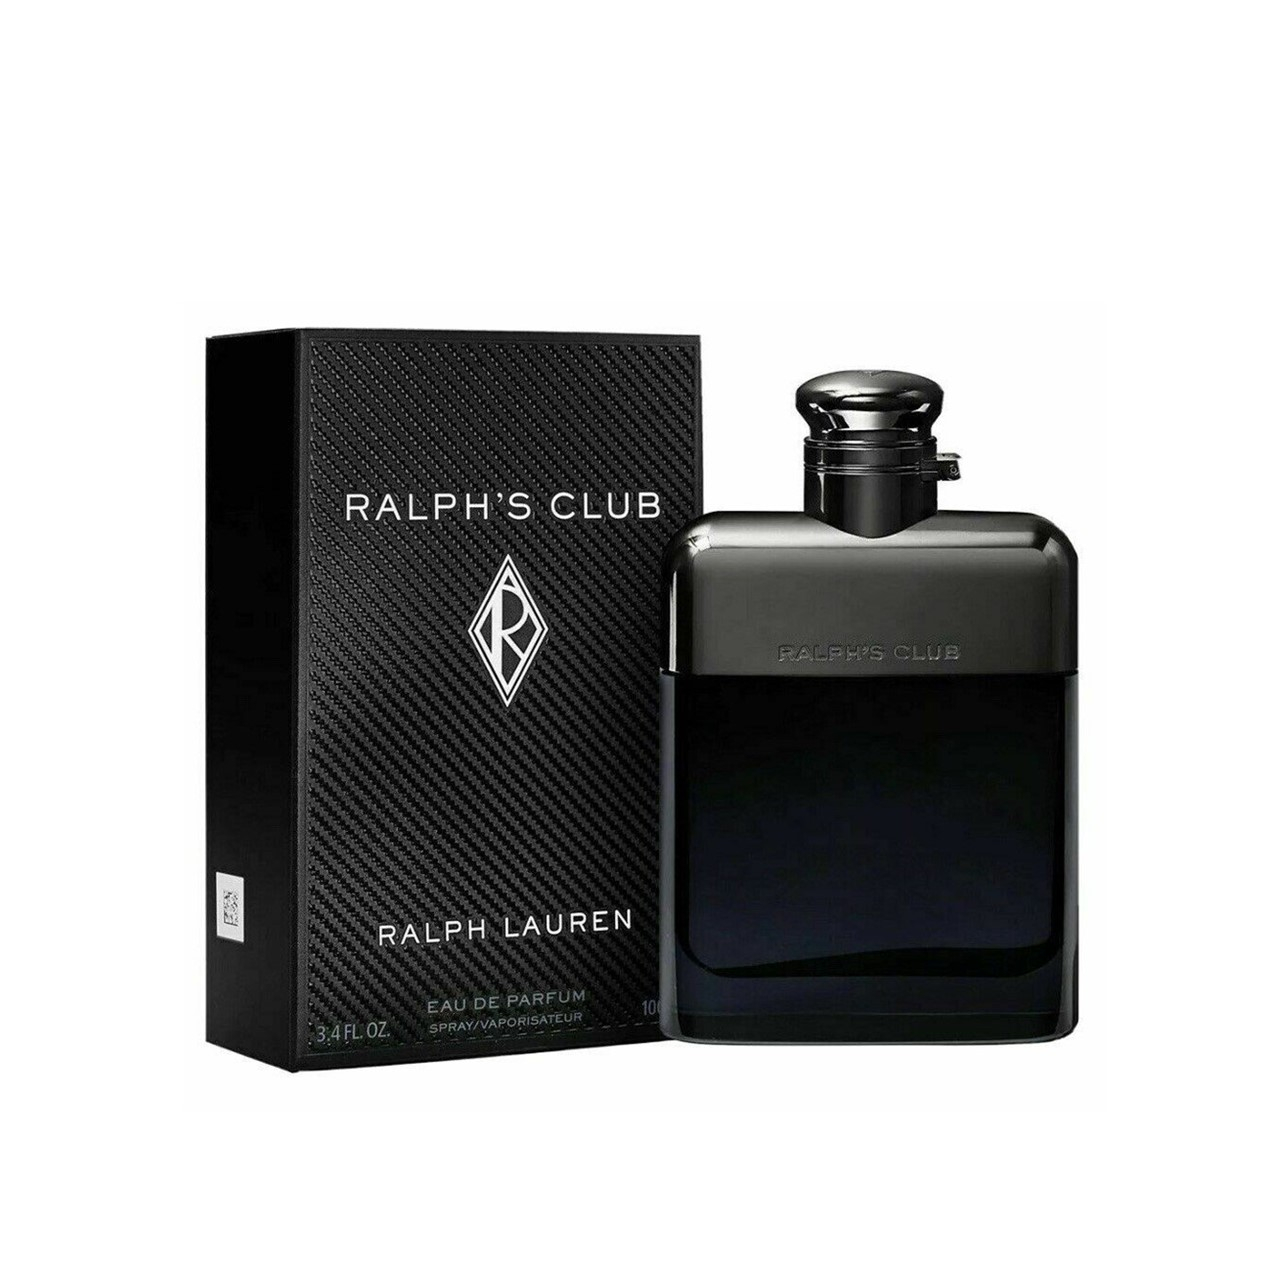 Ralph Lauren Ralph S Club Eau De Parfum For Men 